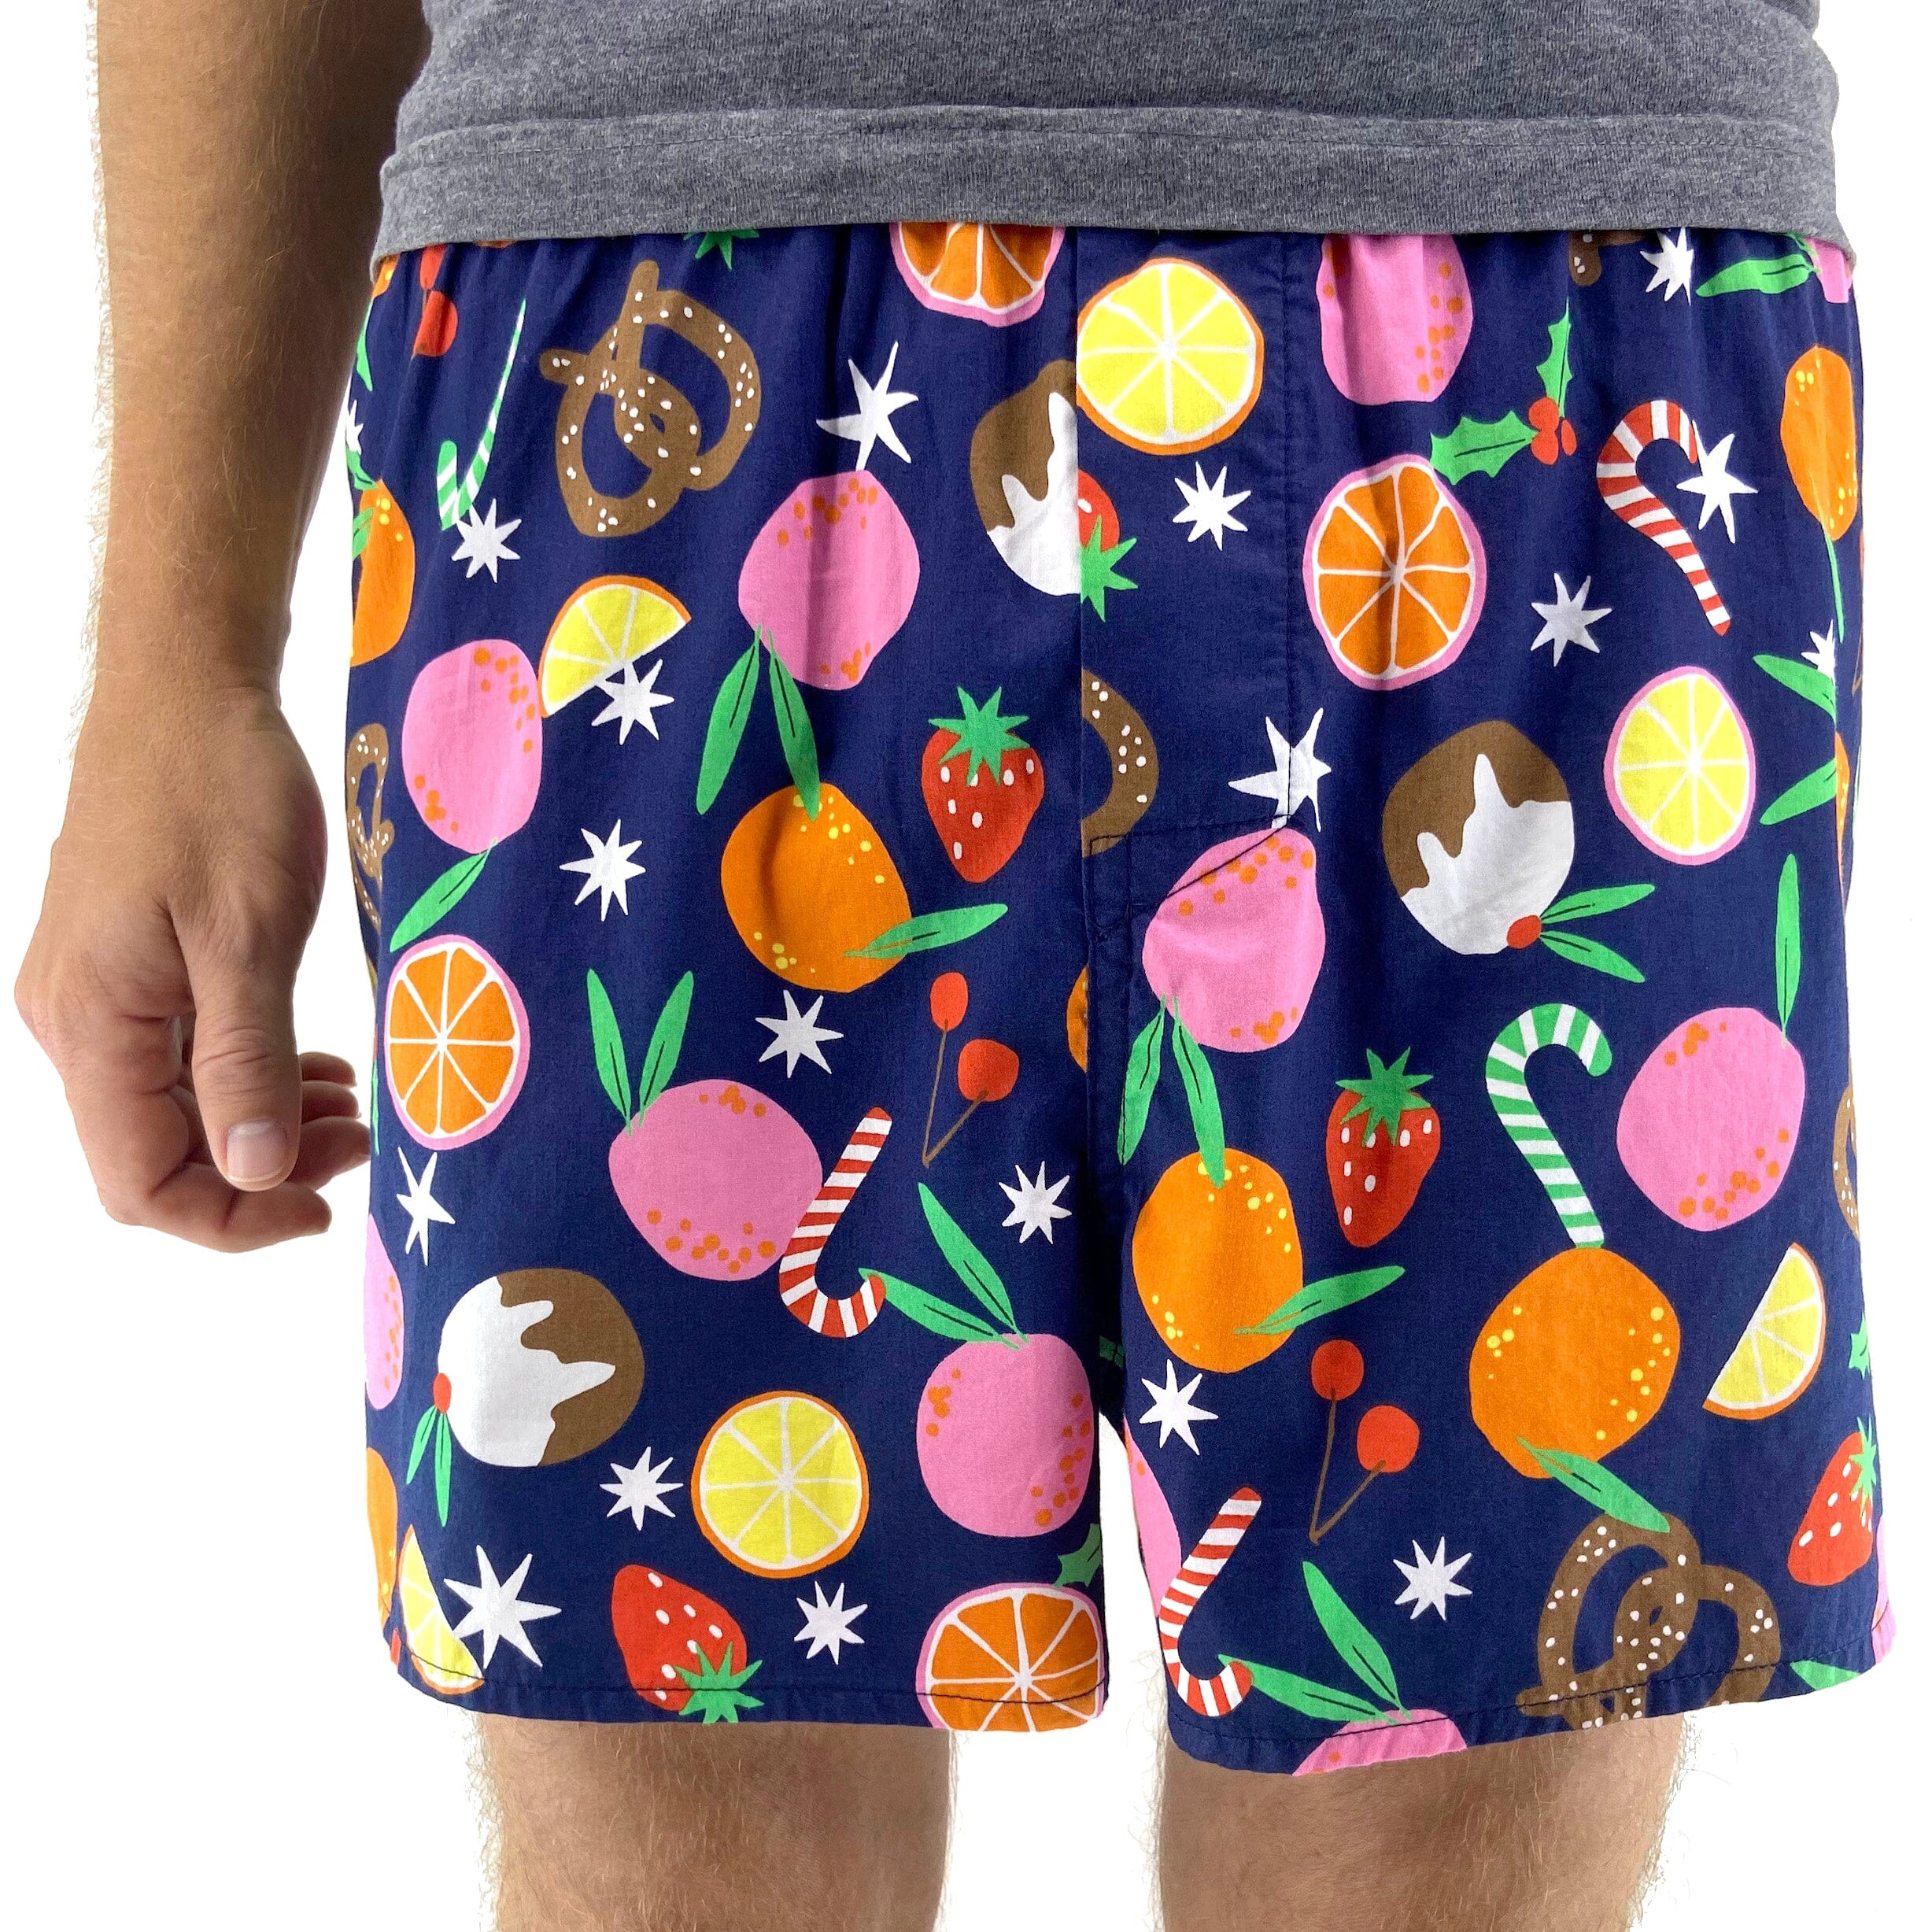 Men's Festive Christmas Holiday Fruit Candy Cane Print Boxer Shorts